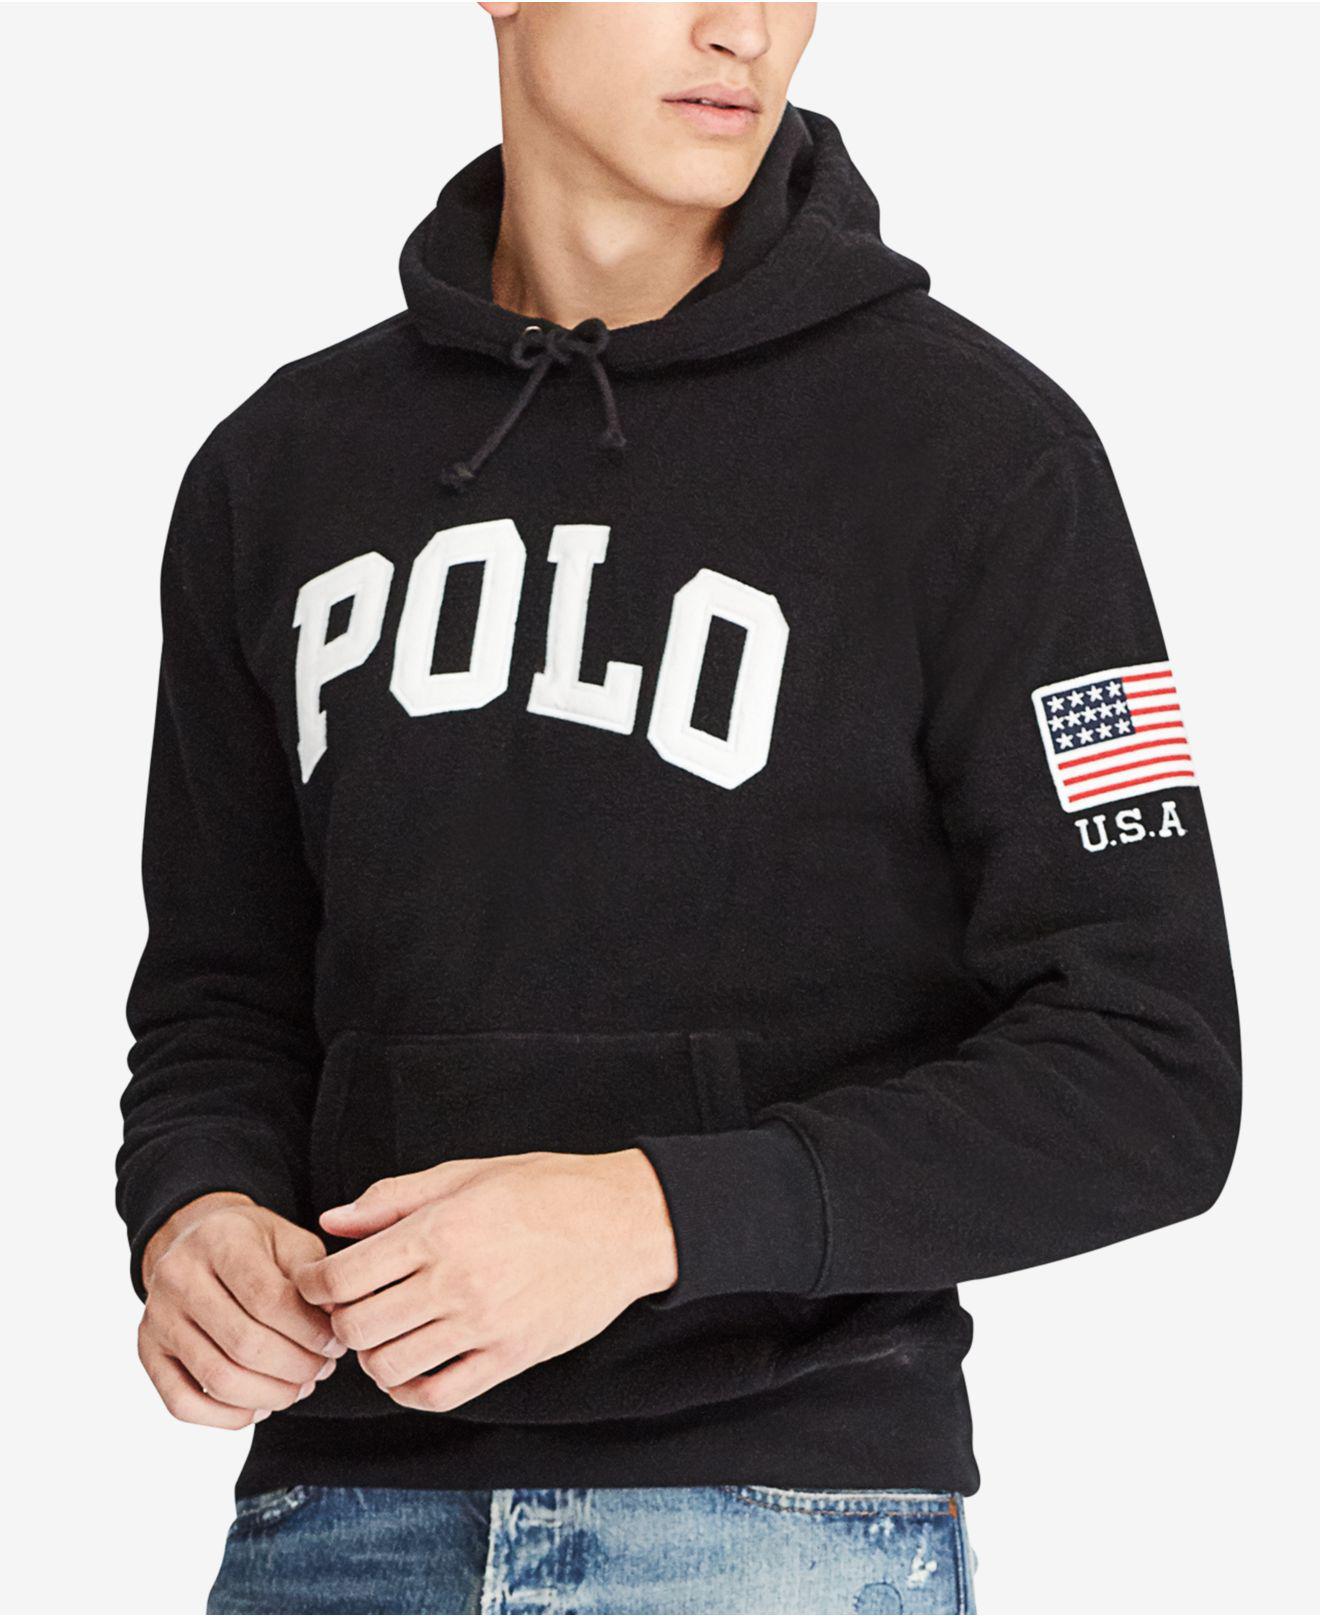 polo hoodies on sale